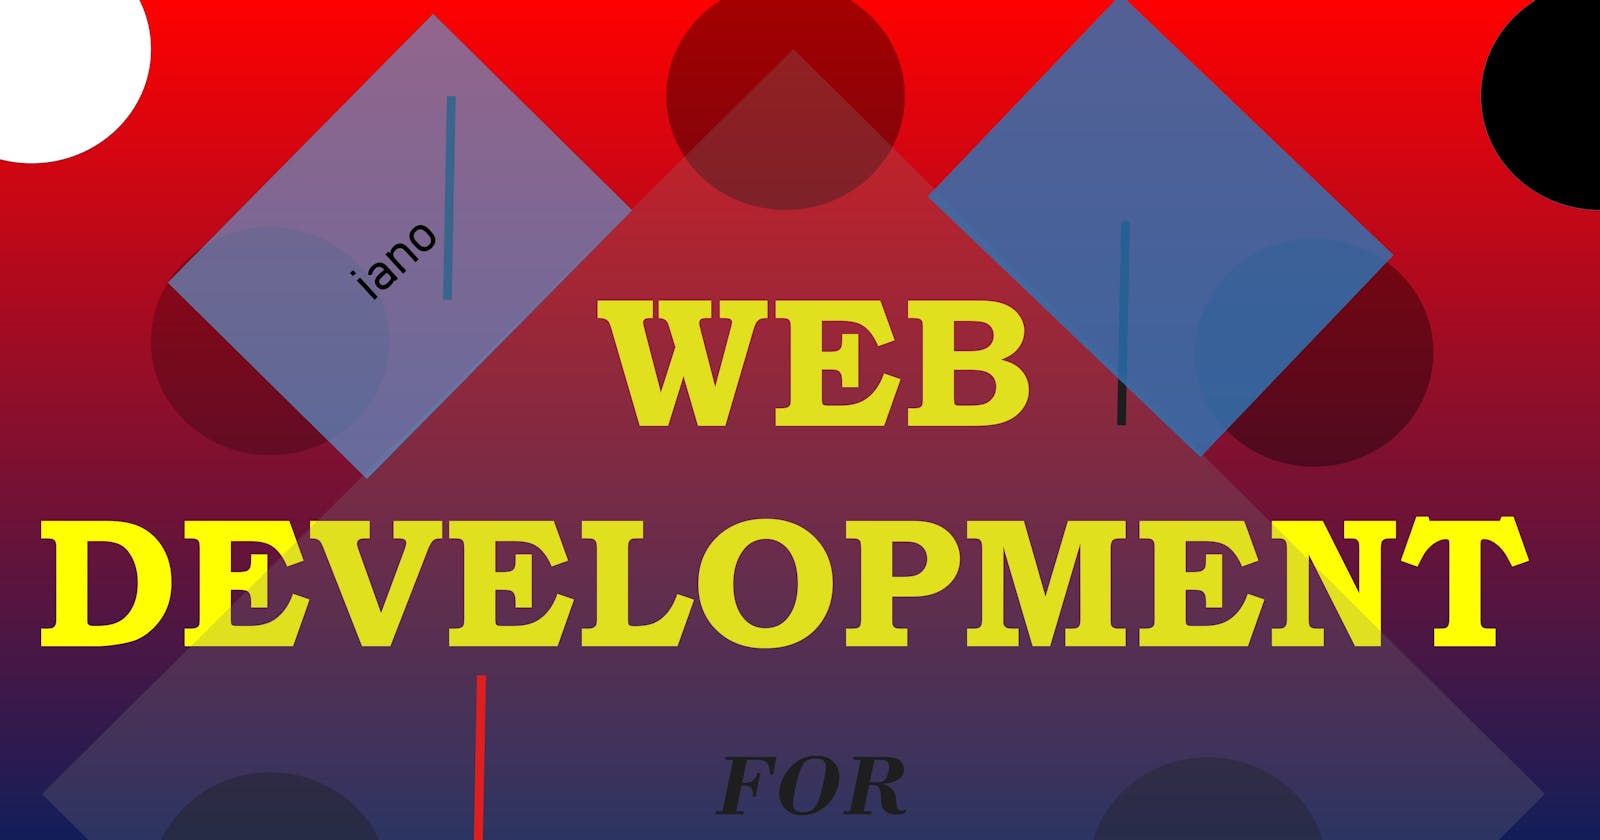 Web development starter pack